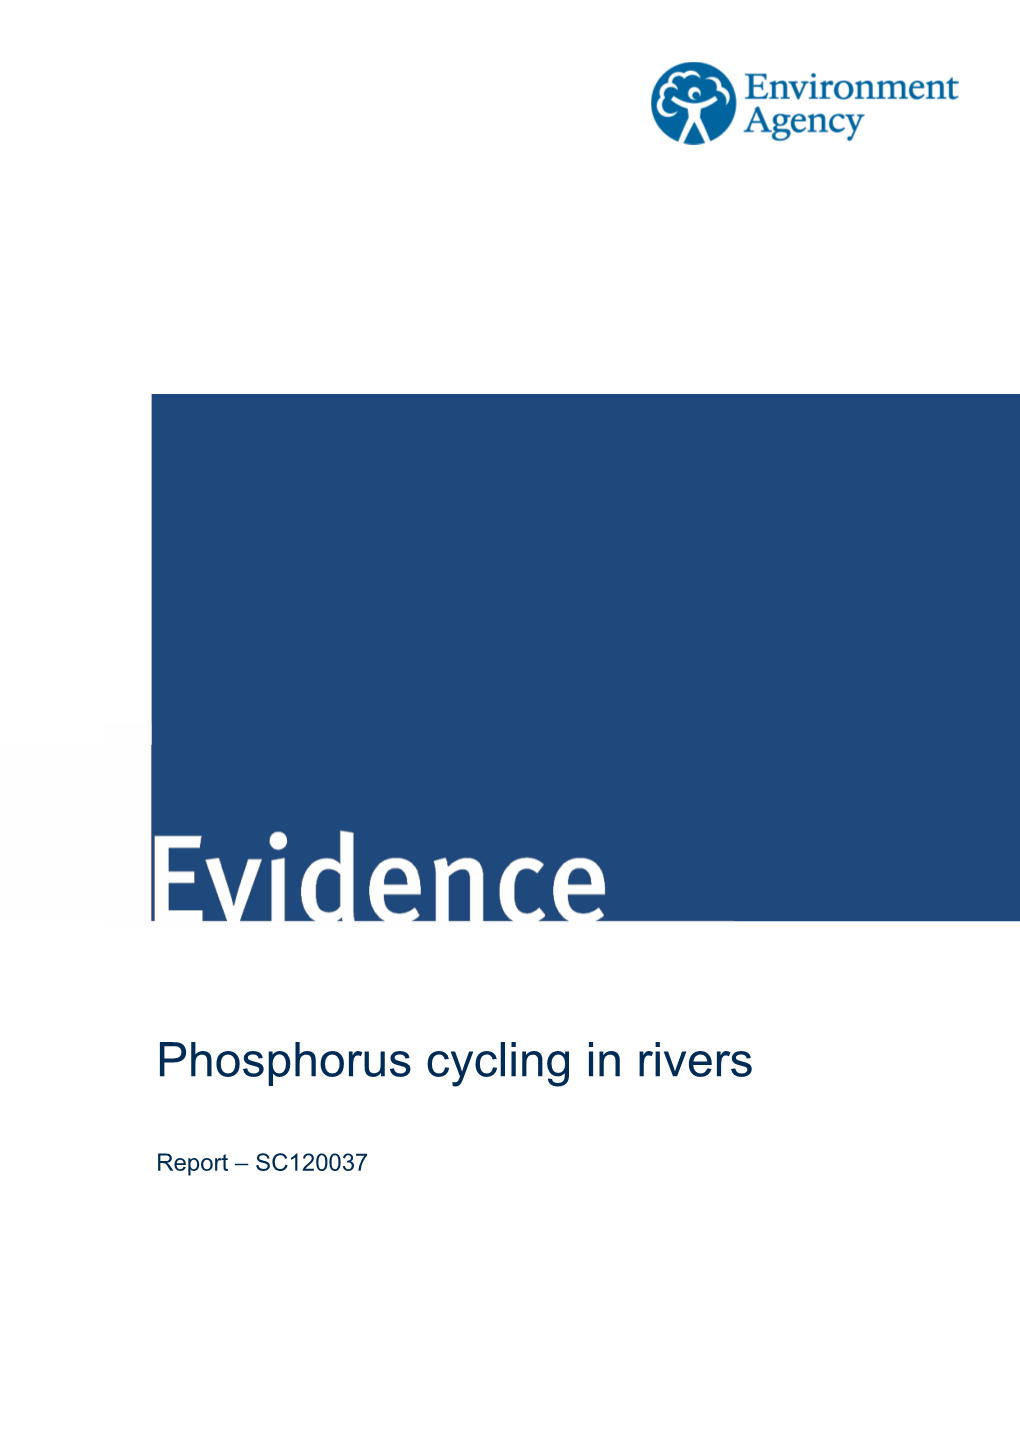 Phosphorus Cycling in Rivers: Report